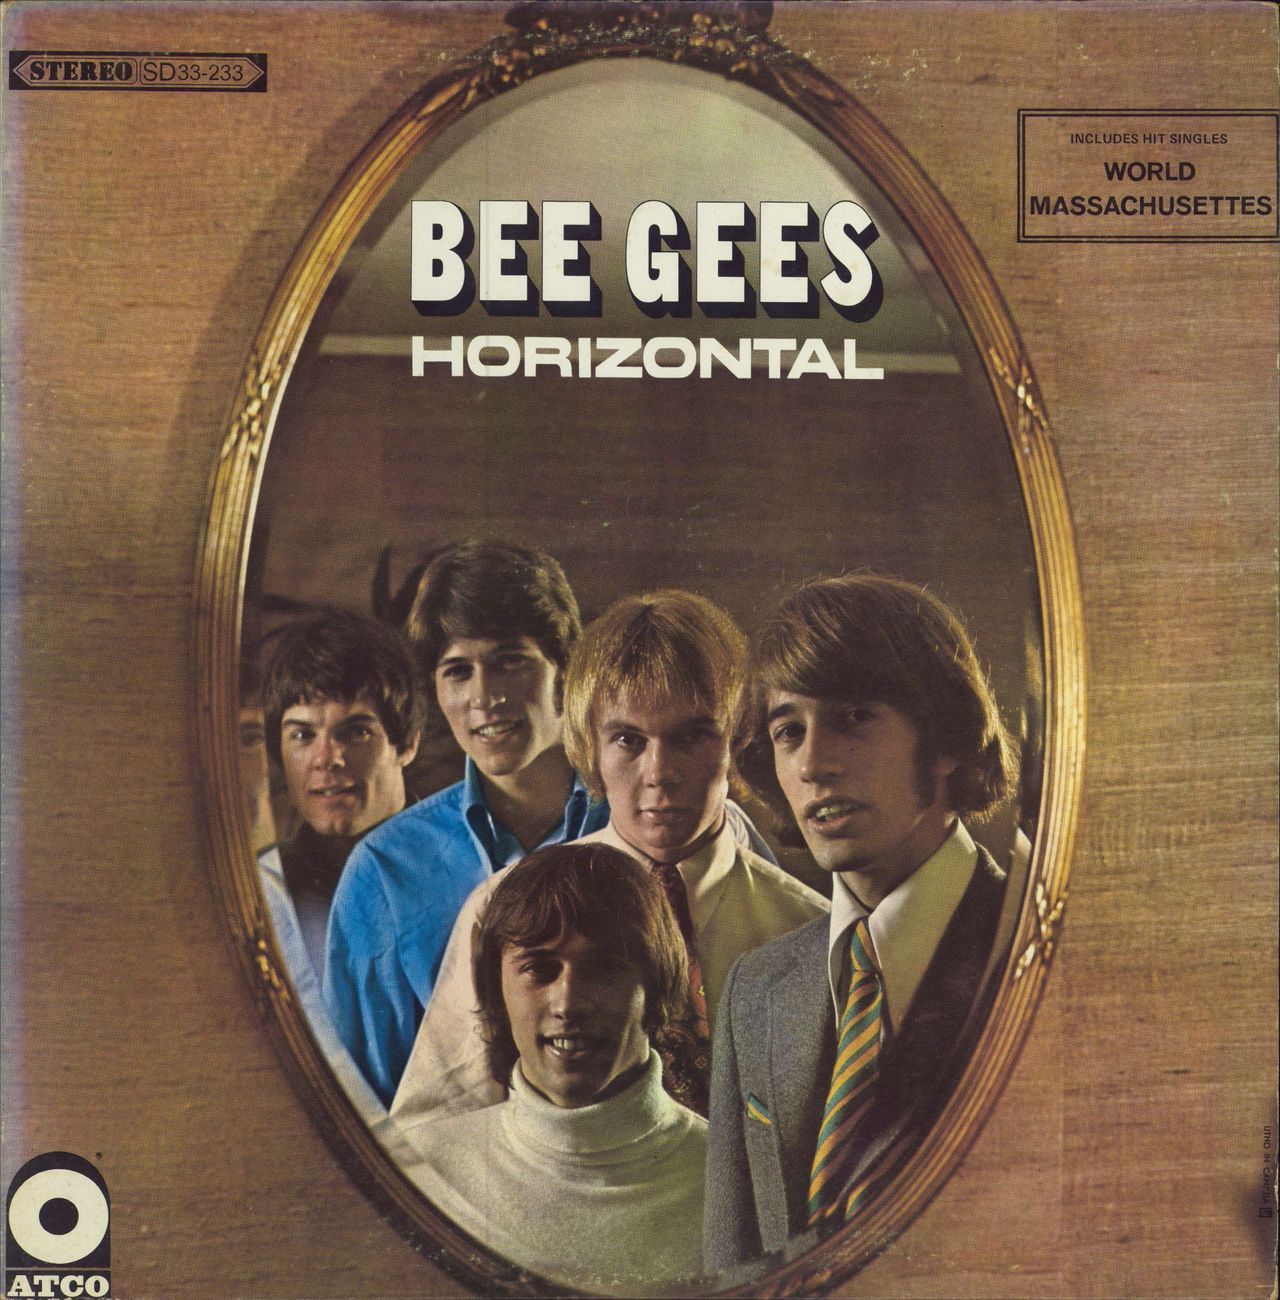 The Bee Gees Horizontal - 1st Canadian vinyl LP album (LP record) SD33-233